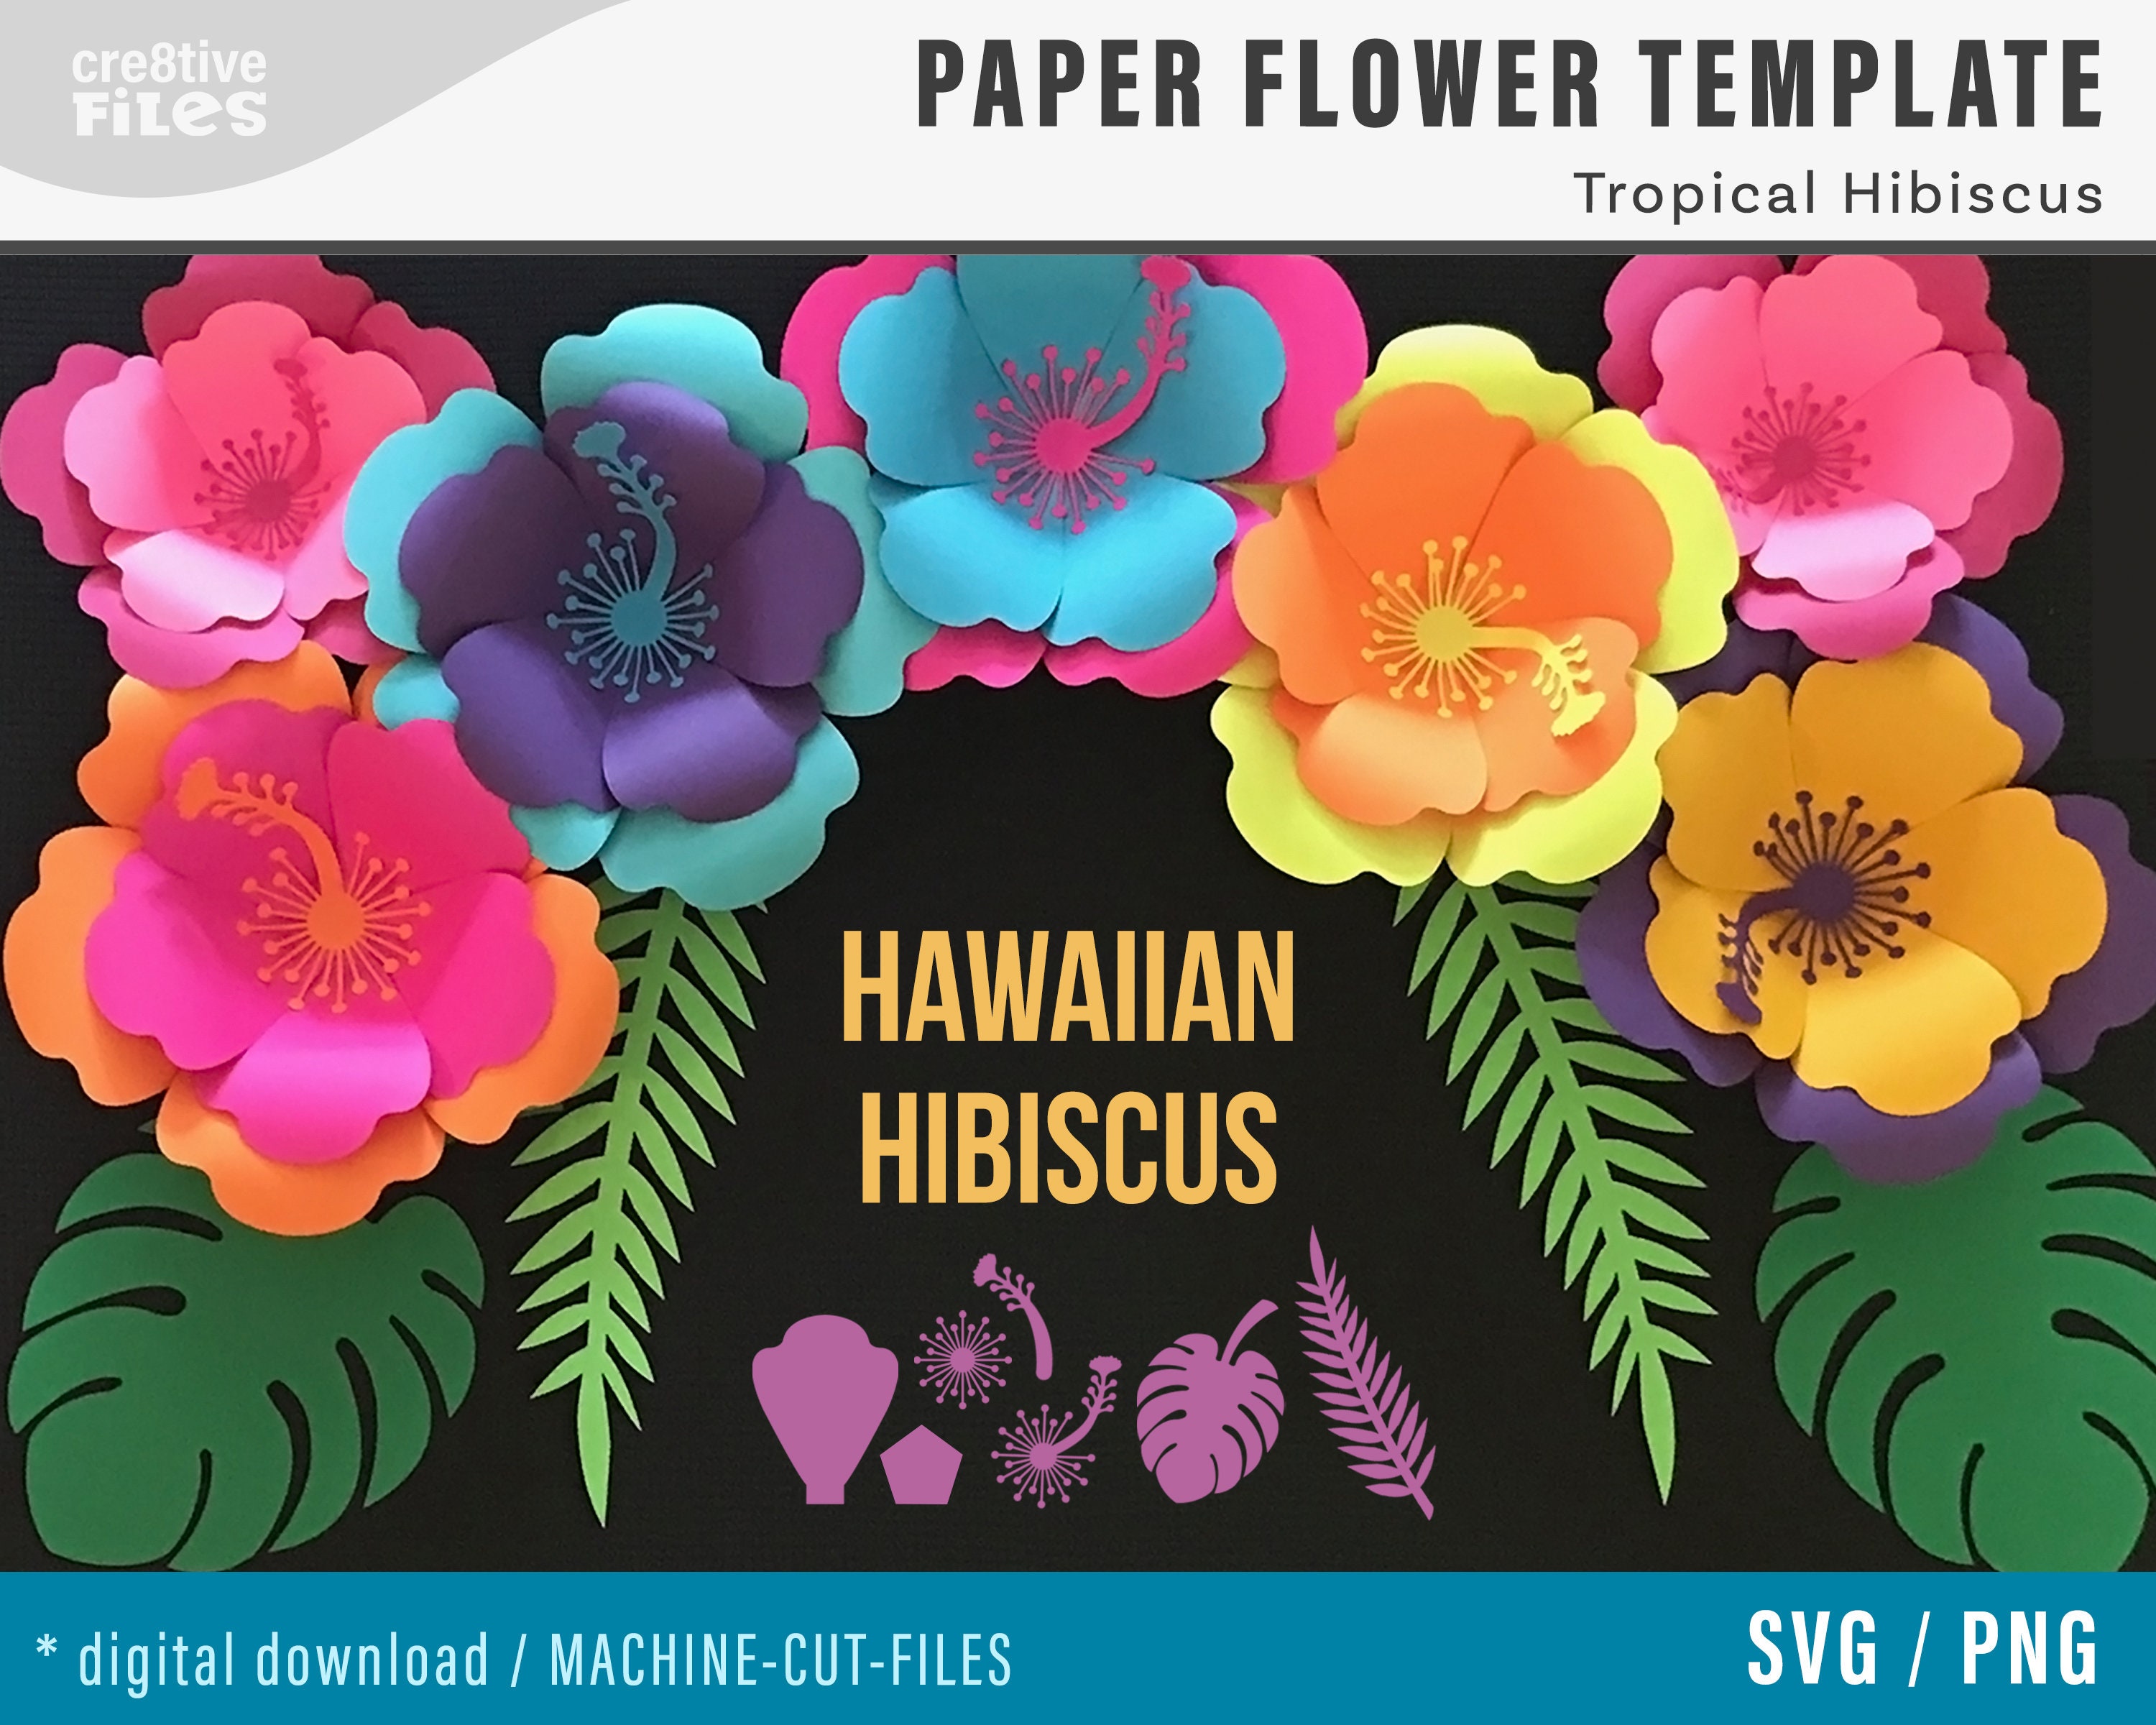 Svg paper flower hibiscus template tropical set hawaiian flower centers tropical leaves base diy tropical flowers cricut luau decor